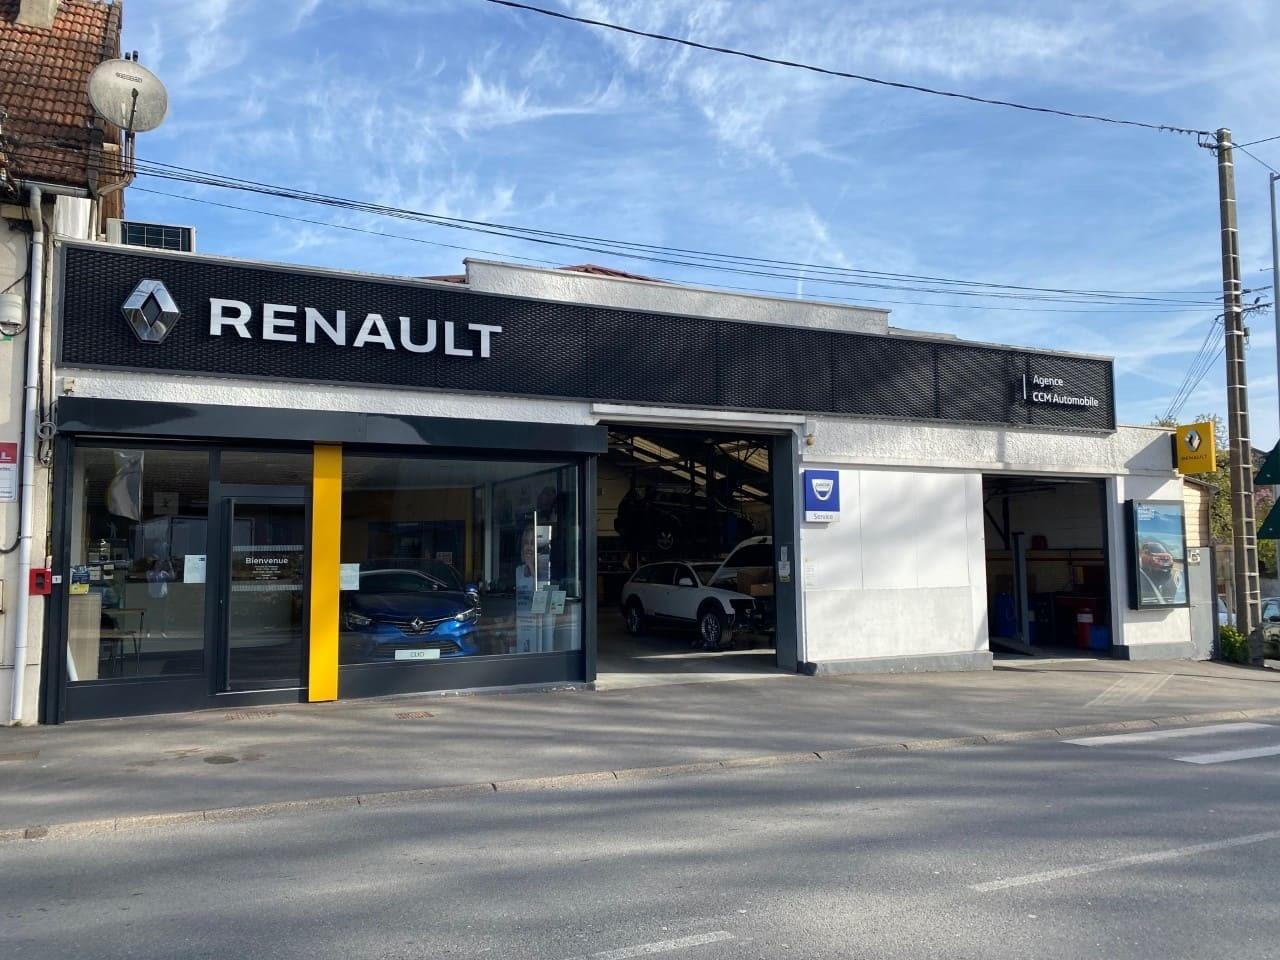 Renault Ccm Automobile Montry